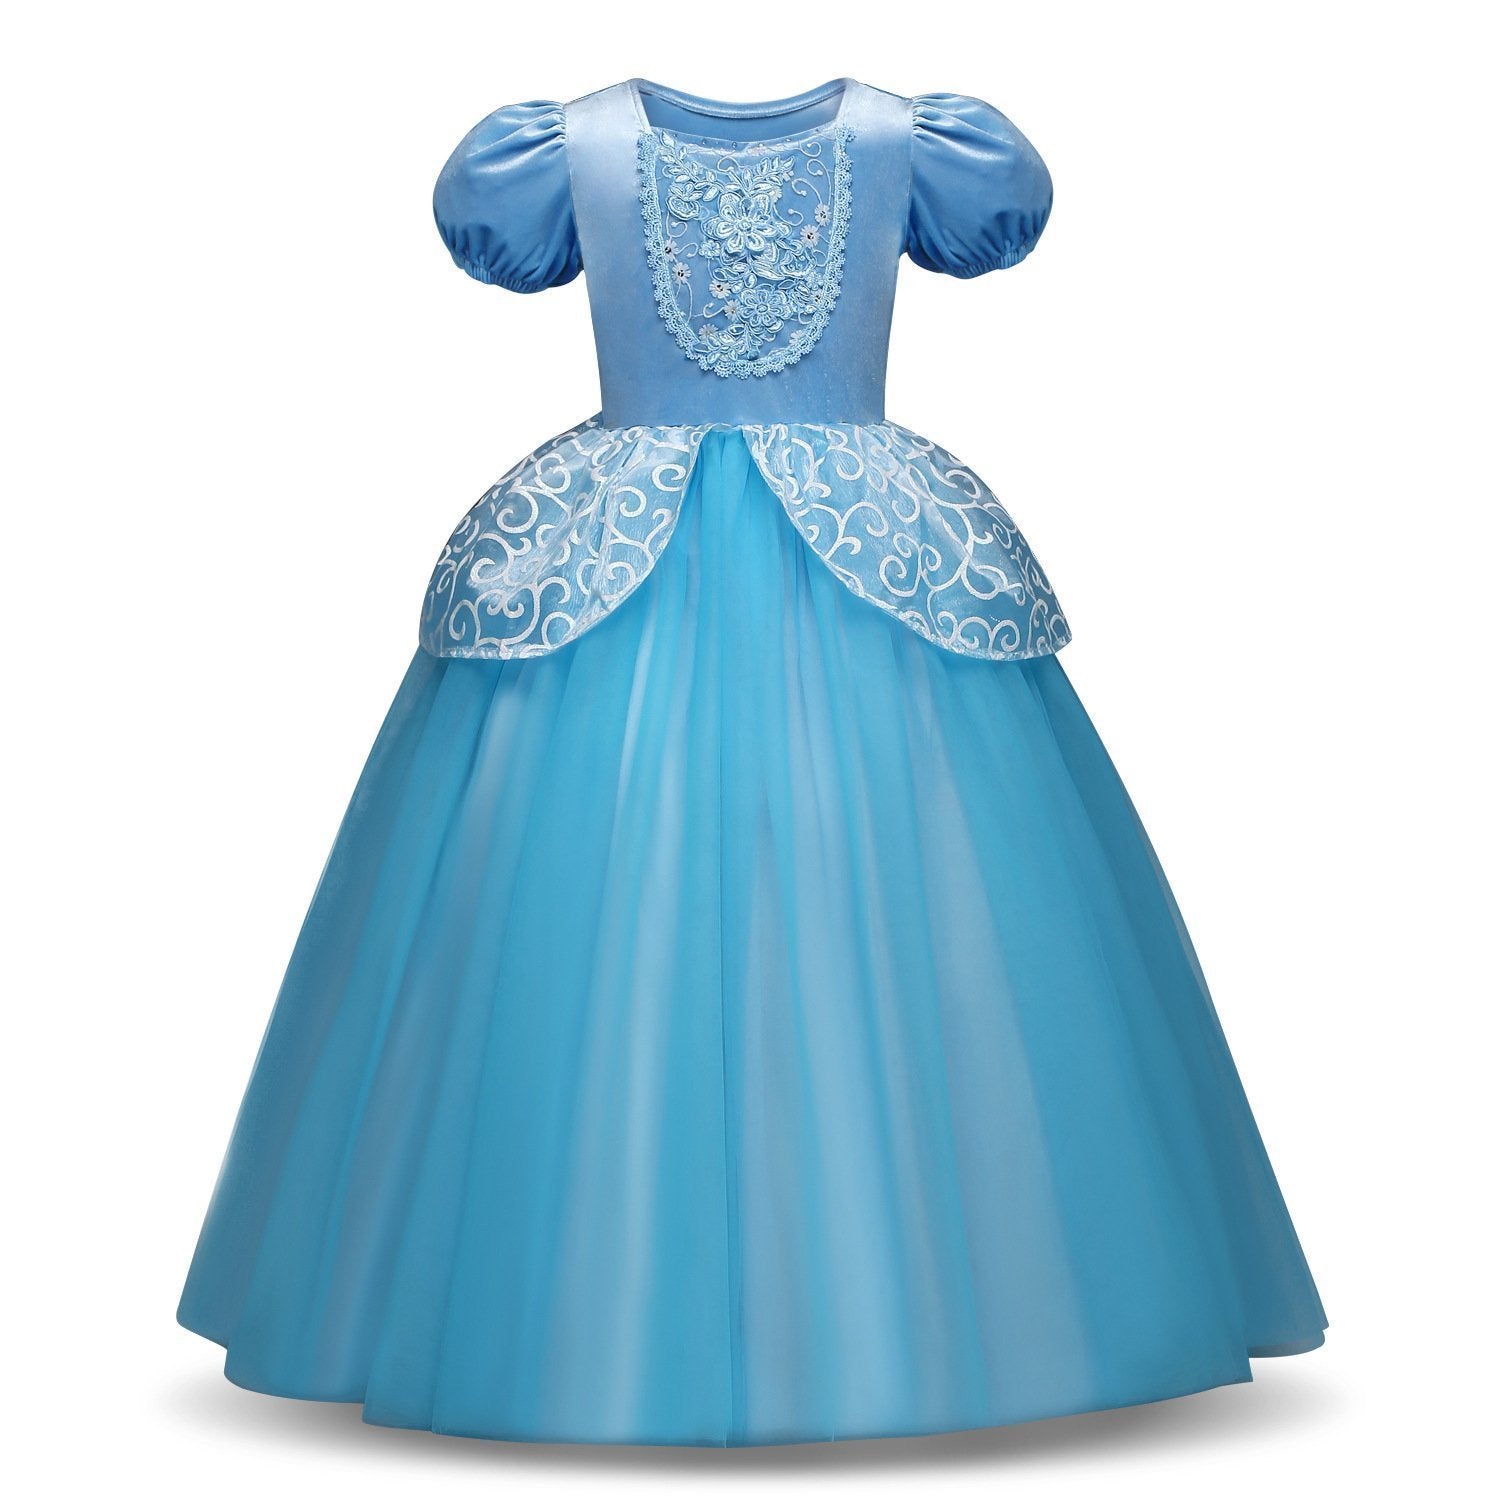 Girls Cinderella Dress Princess Costume Dress up Fancy Party Cosplay Butterfly Dress